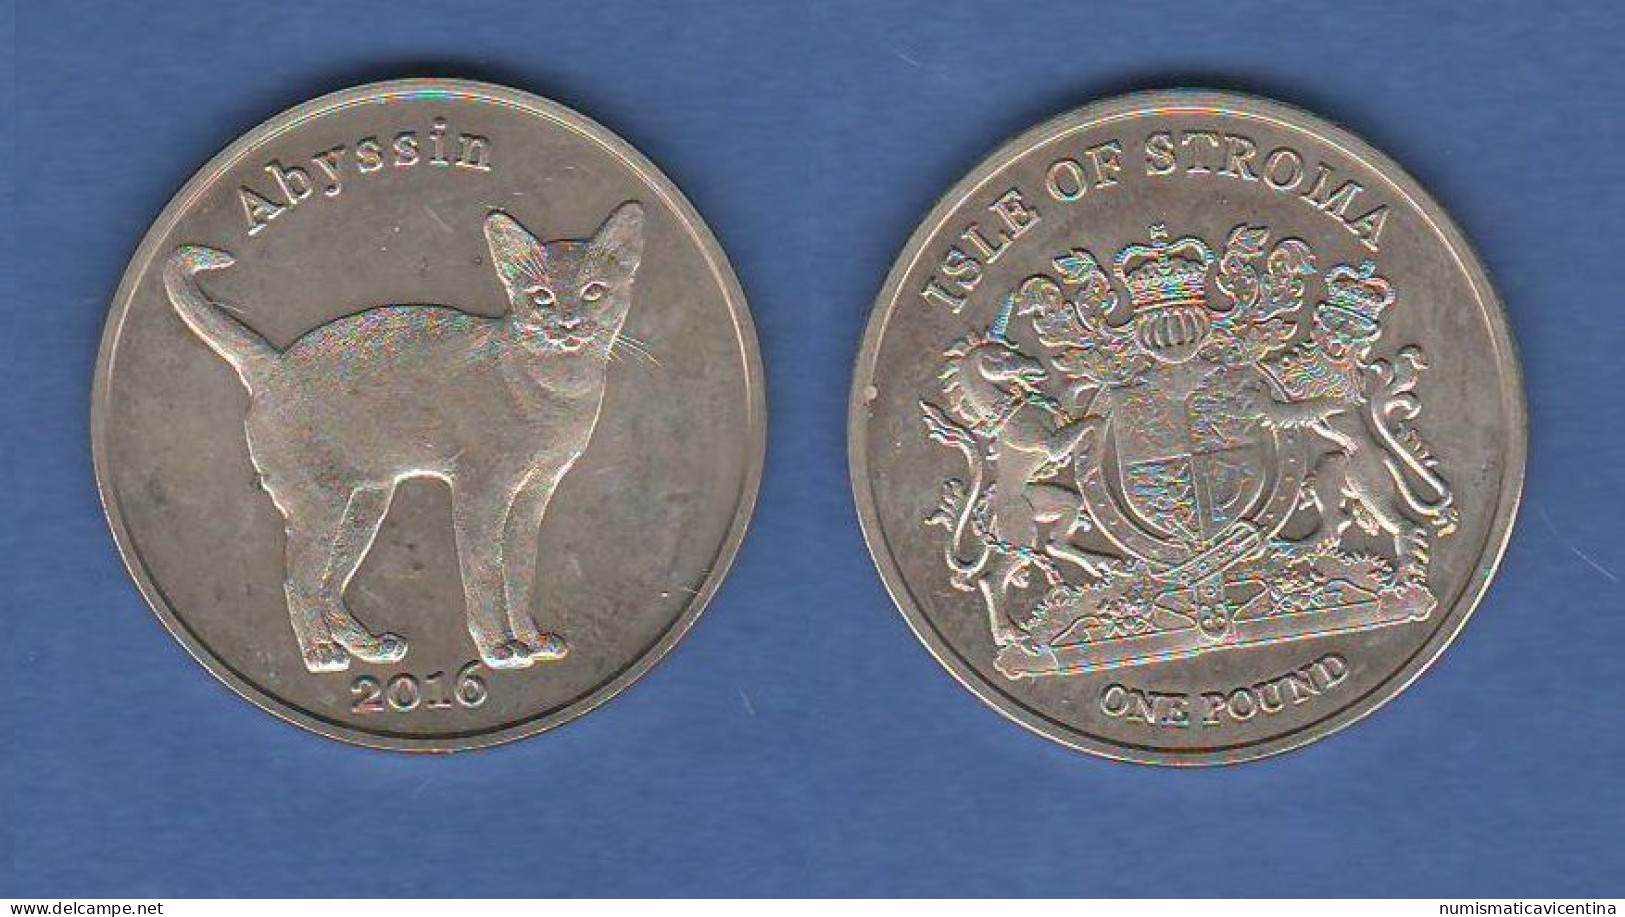 Scozia STROMA Island 1 Pound 2016 Abyssin Cat Fantasy Fictional Fantasy Currency Scotland Écosse - Schots